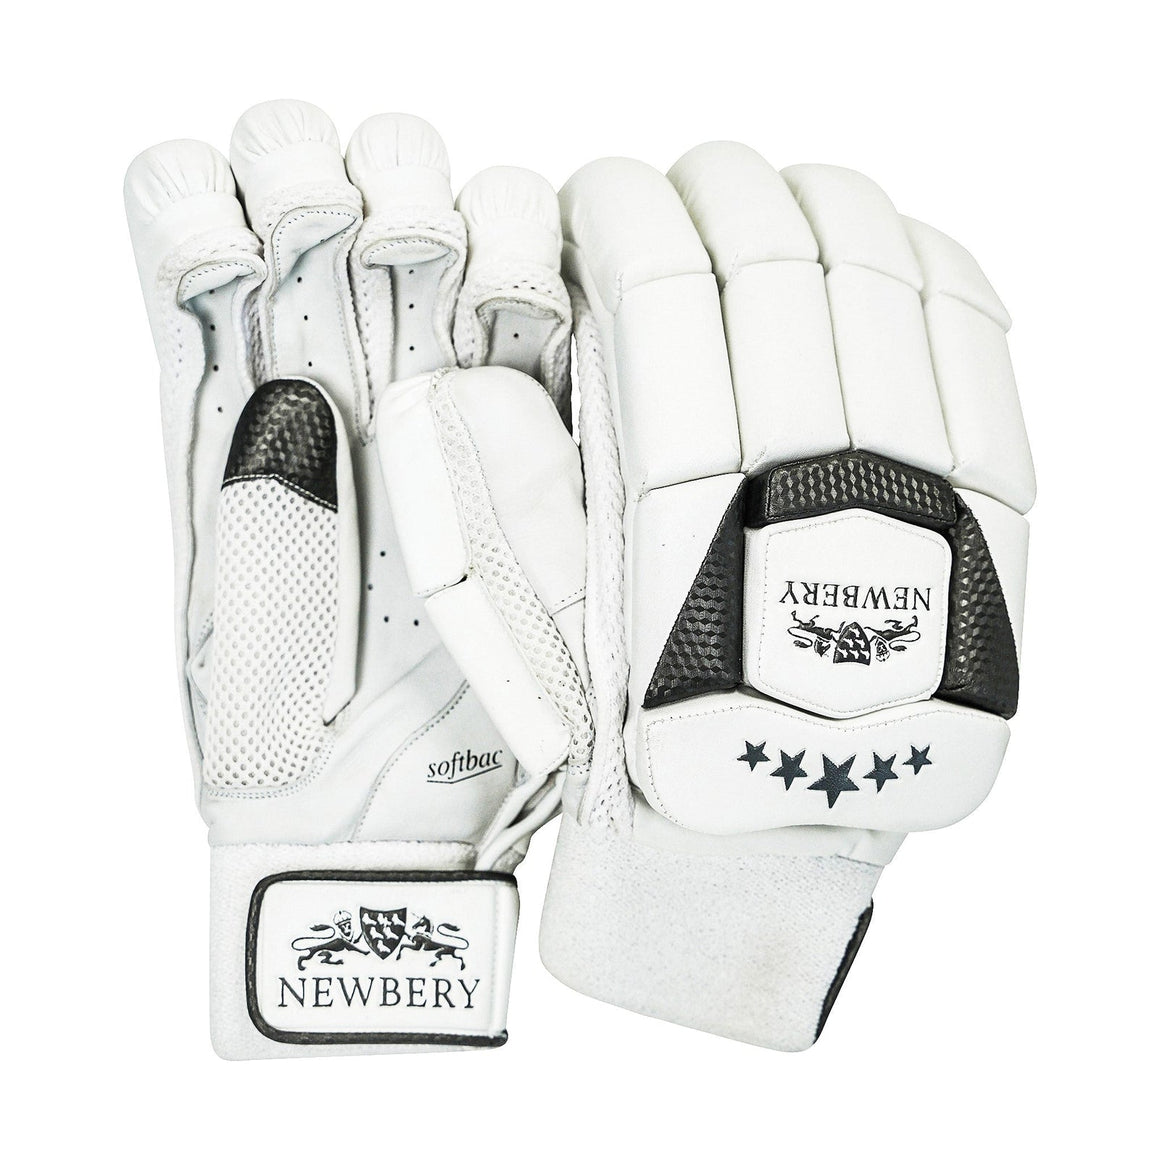 Newbery 5 Star Batting Gloves